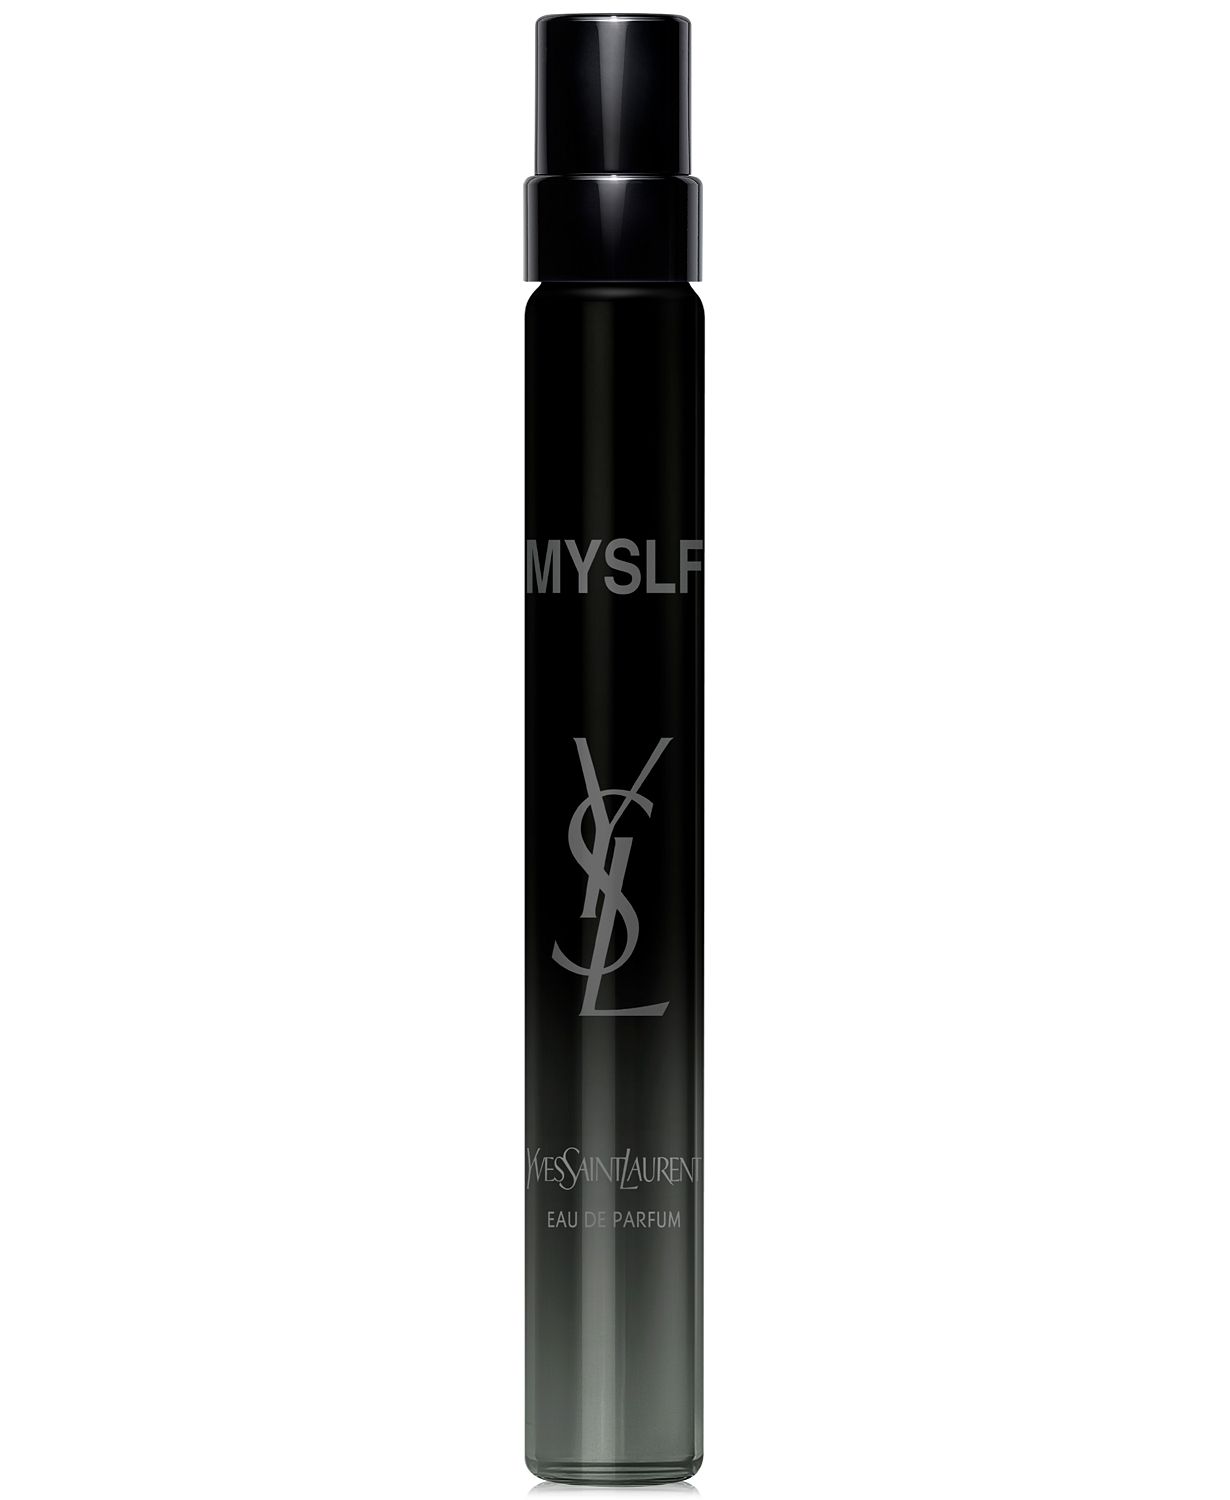 MYSLF Eau de Parfum Travel Spray, 0.34 oz.